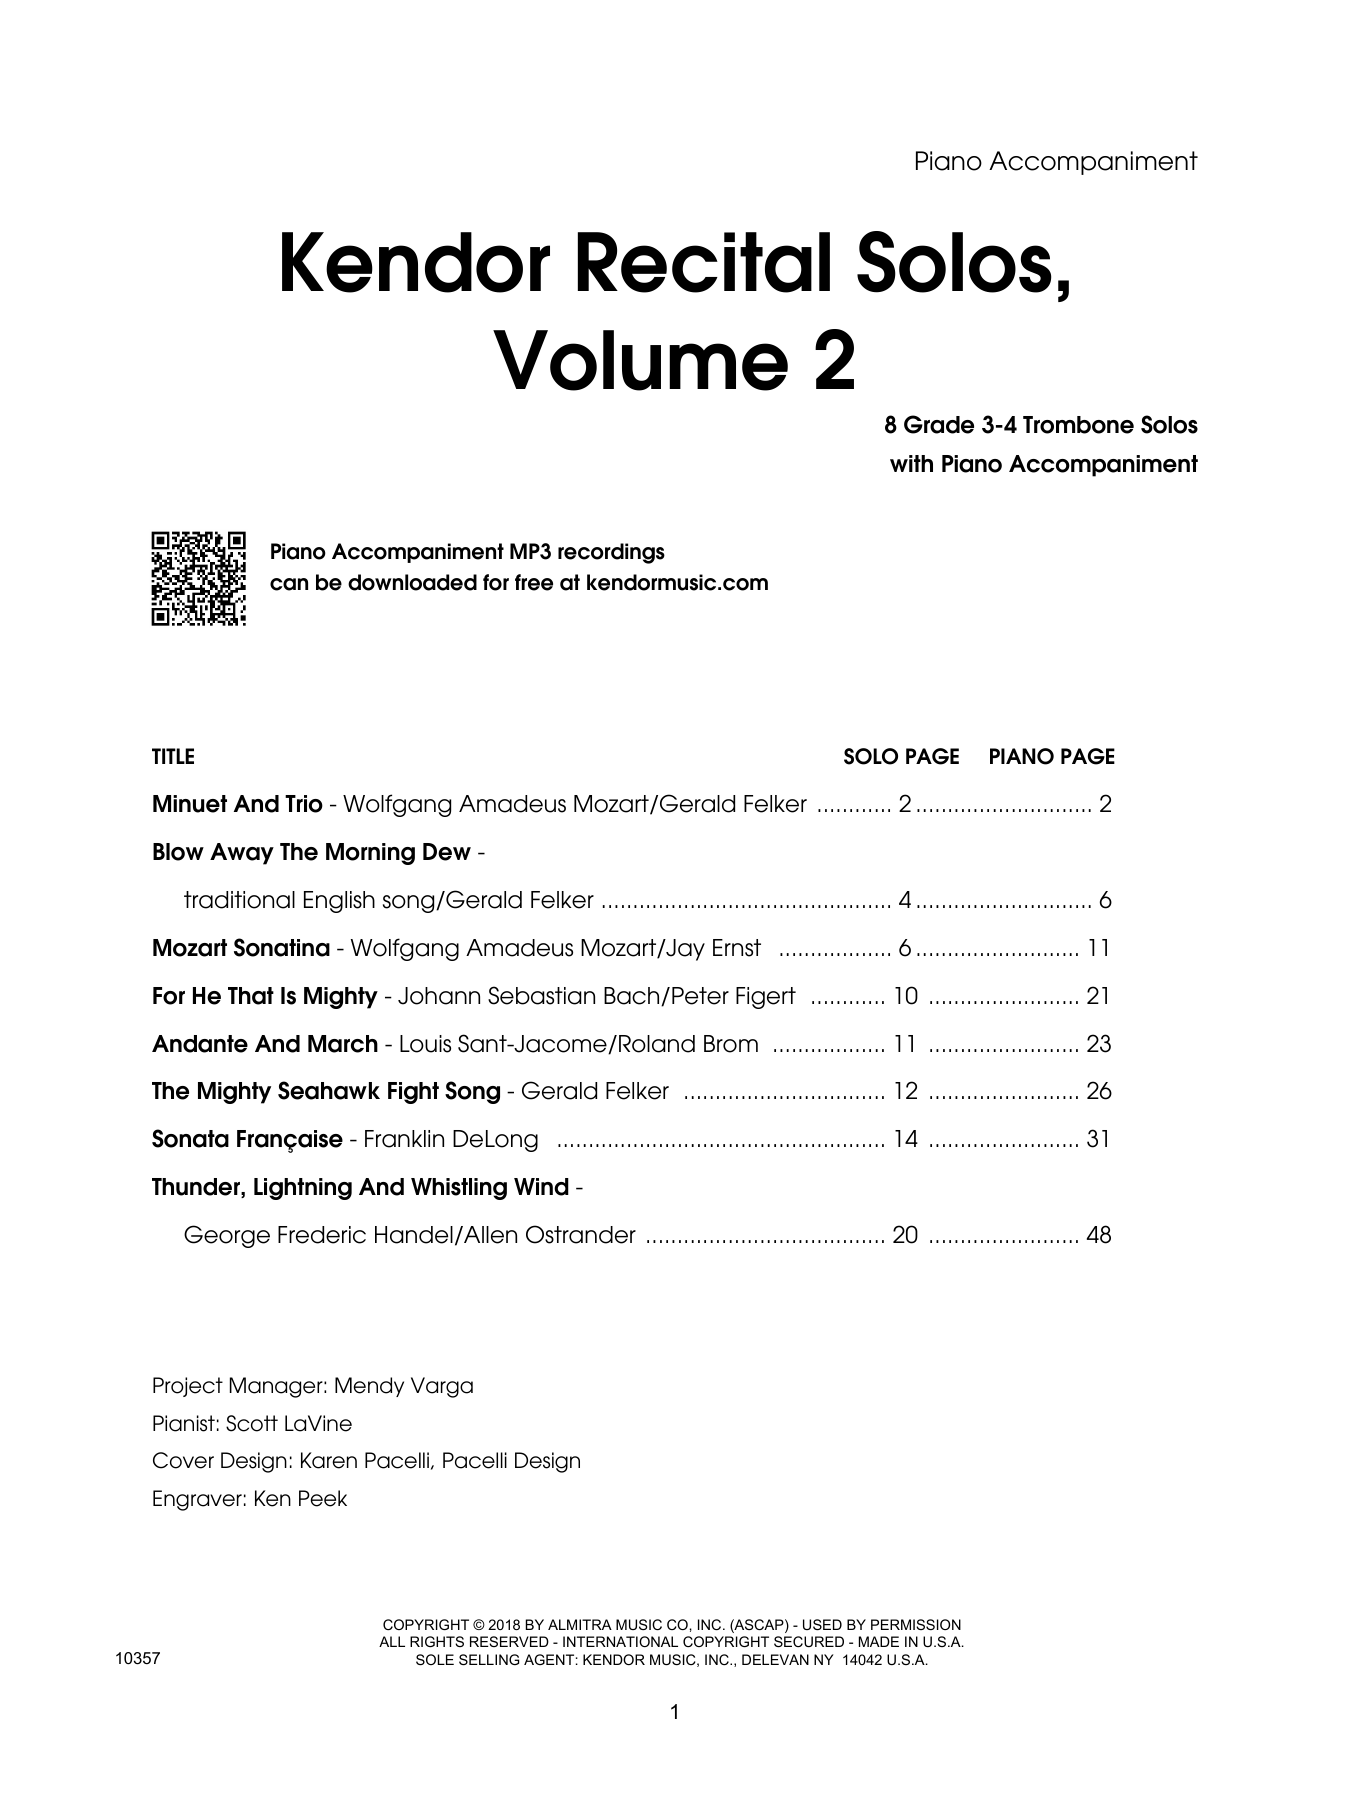 Download Various Kendor Recital Solos, Volume 2 - Trombo Sheet Music